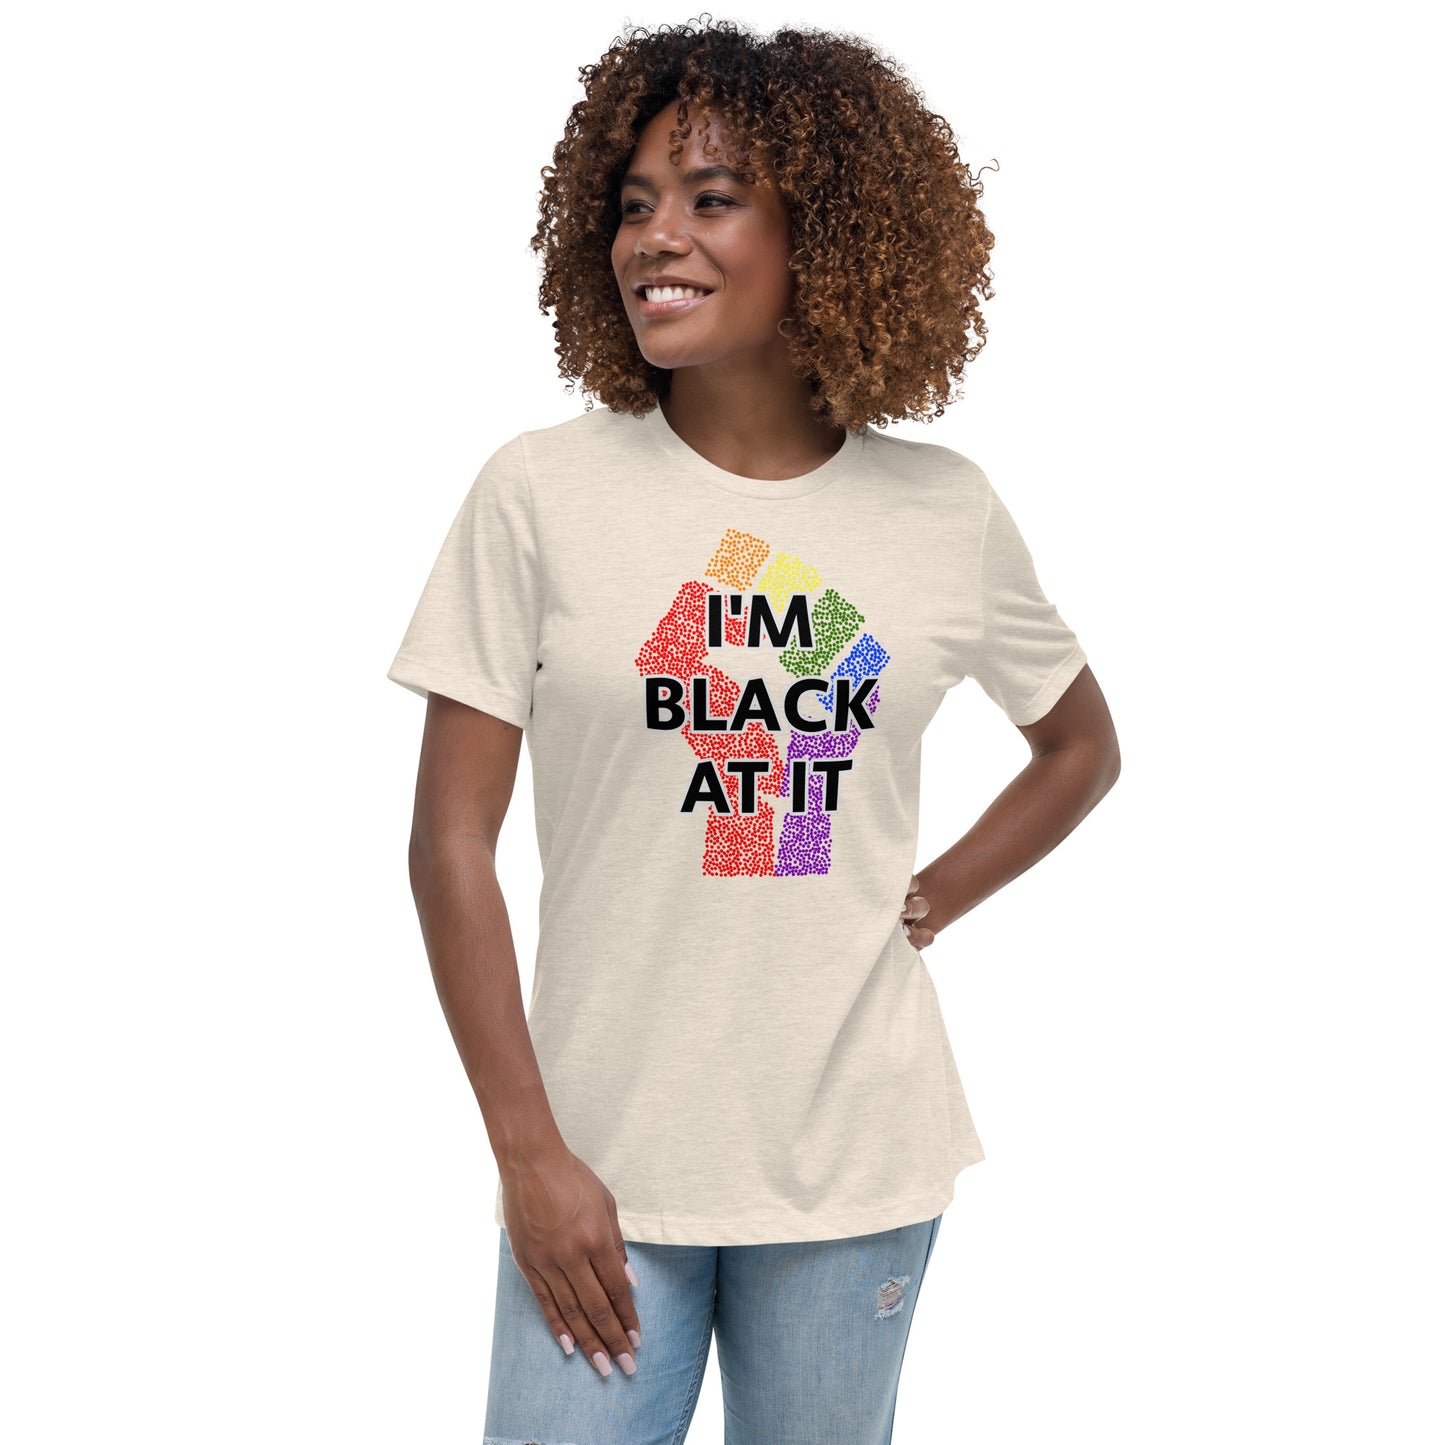 Black At It Women's T-Shirt